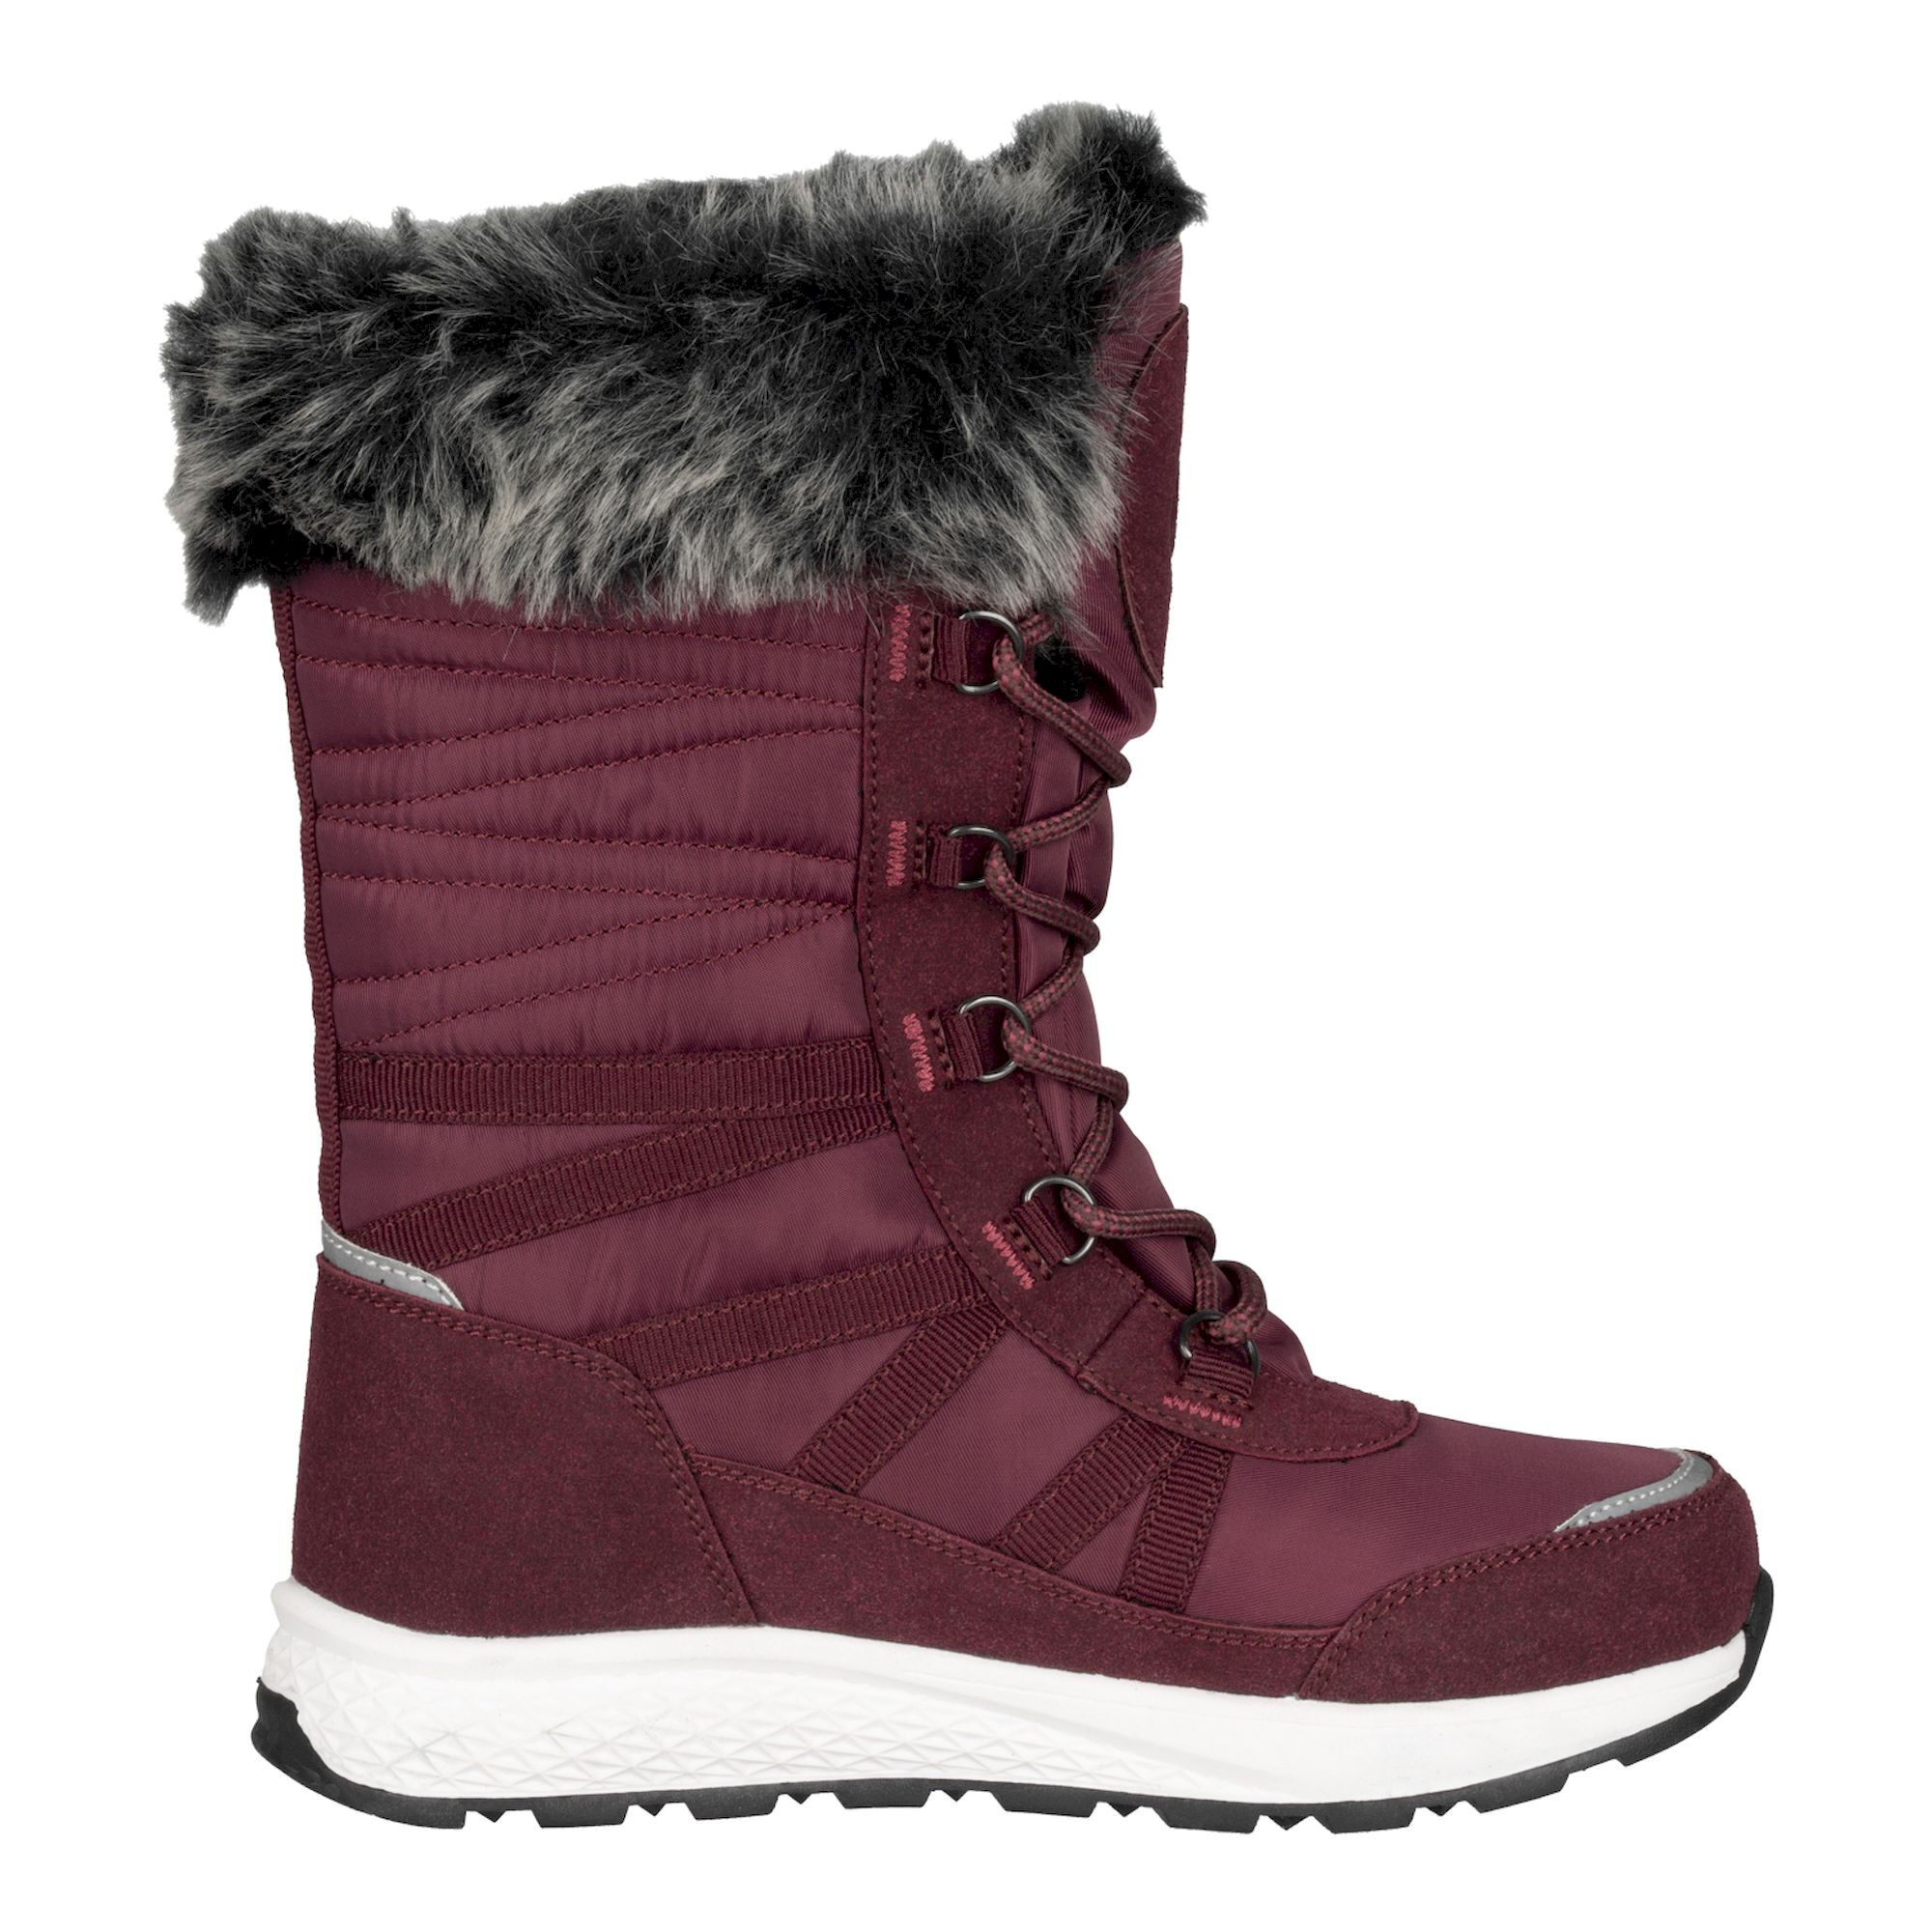 Trollkids Hemsedal Winter Boots XT - Śniegowce dla dzieci | Hardloop